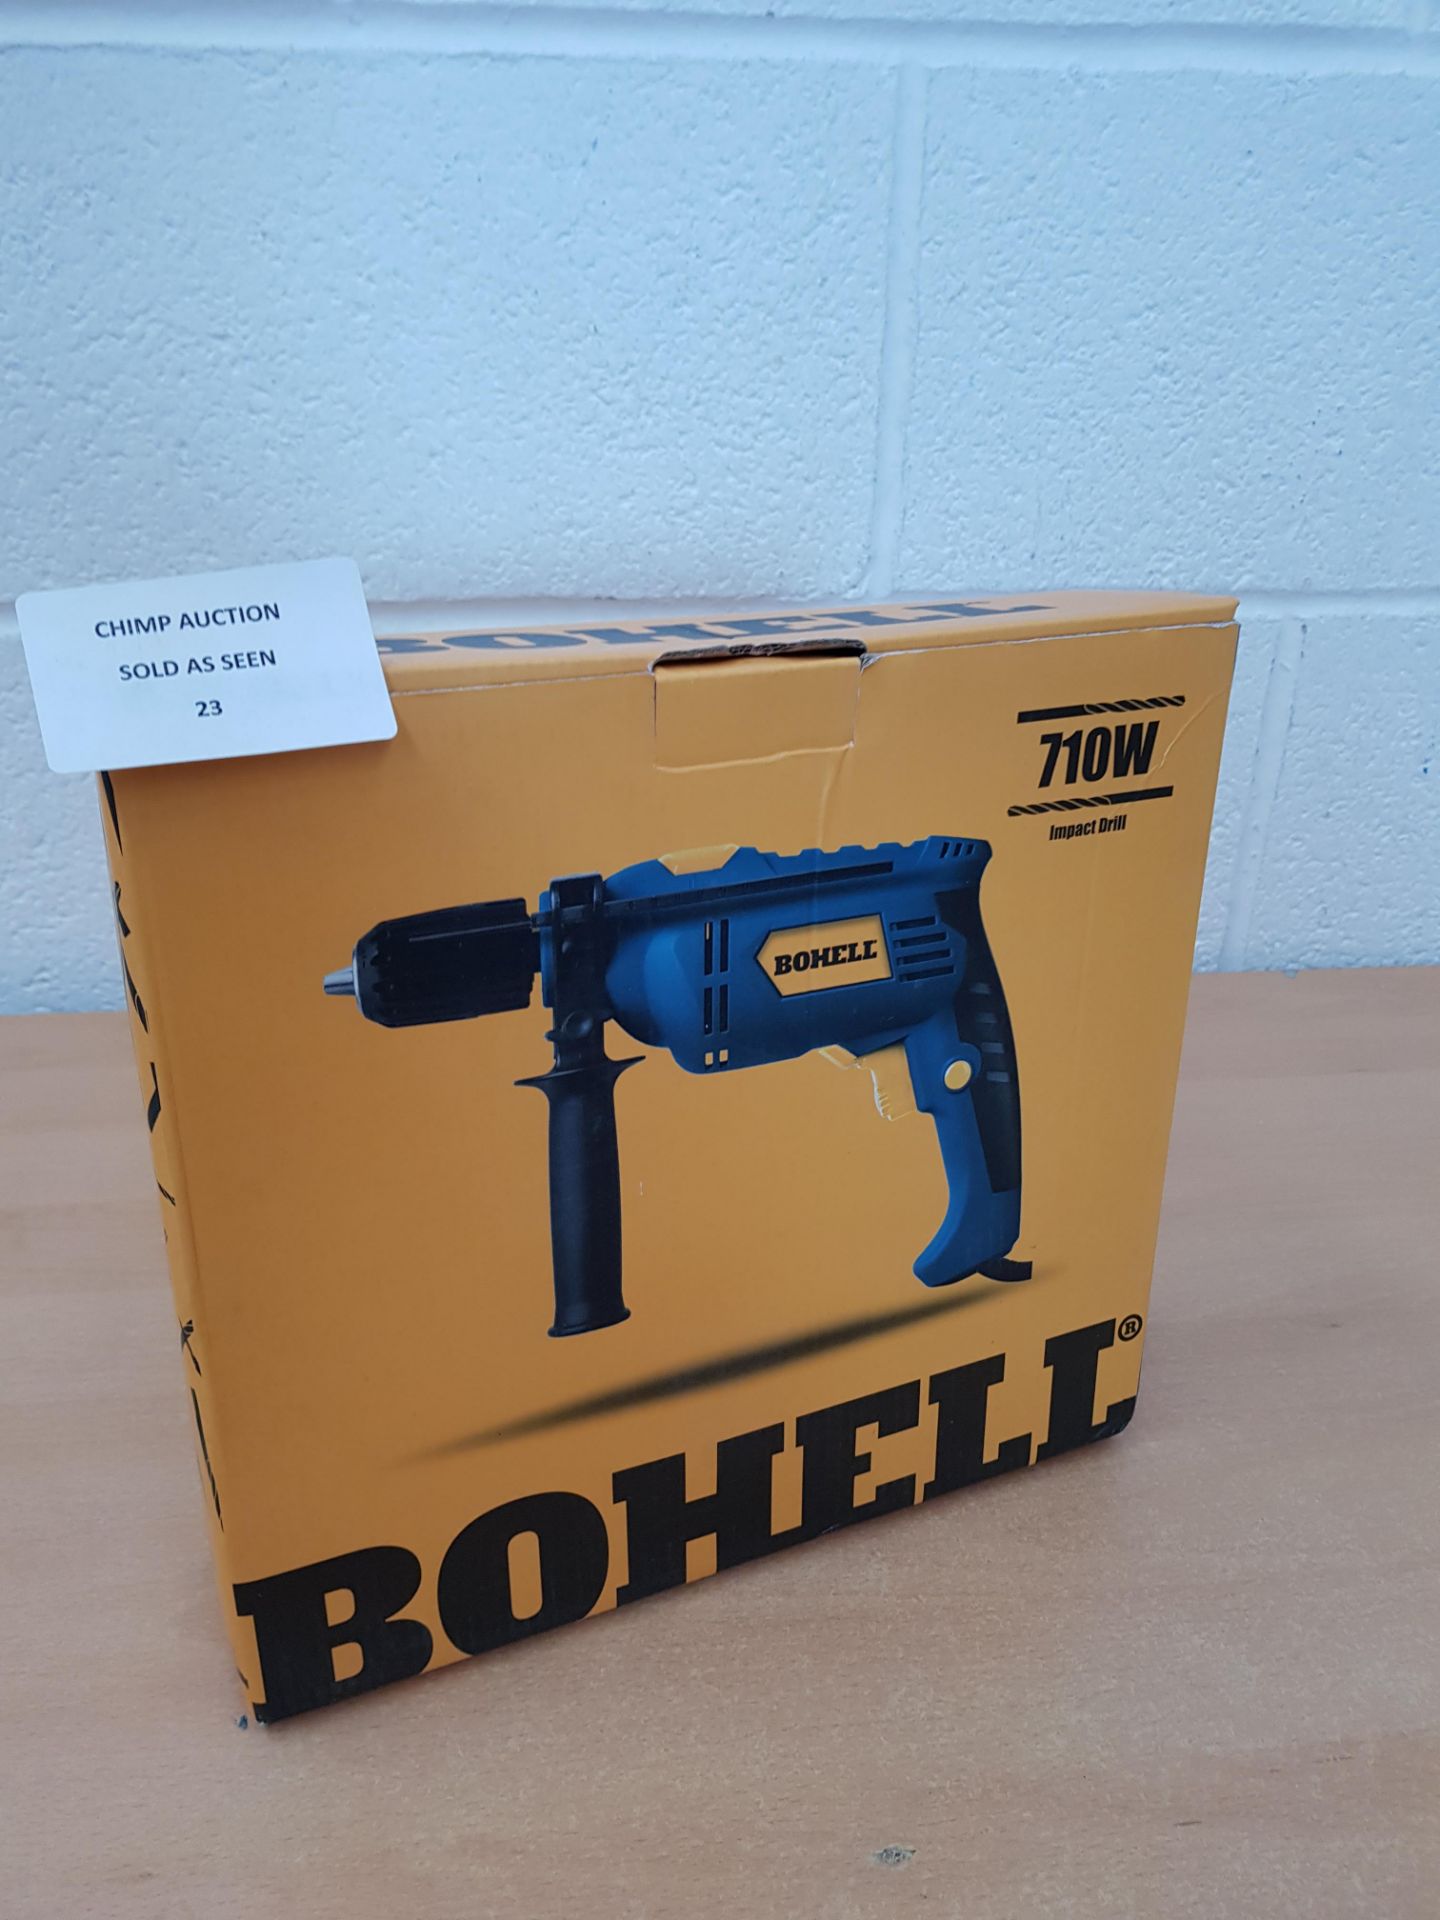 Bohell 710W Impact Professional Drill